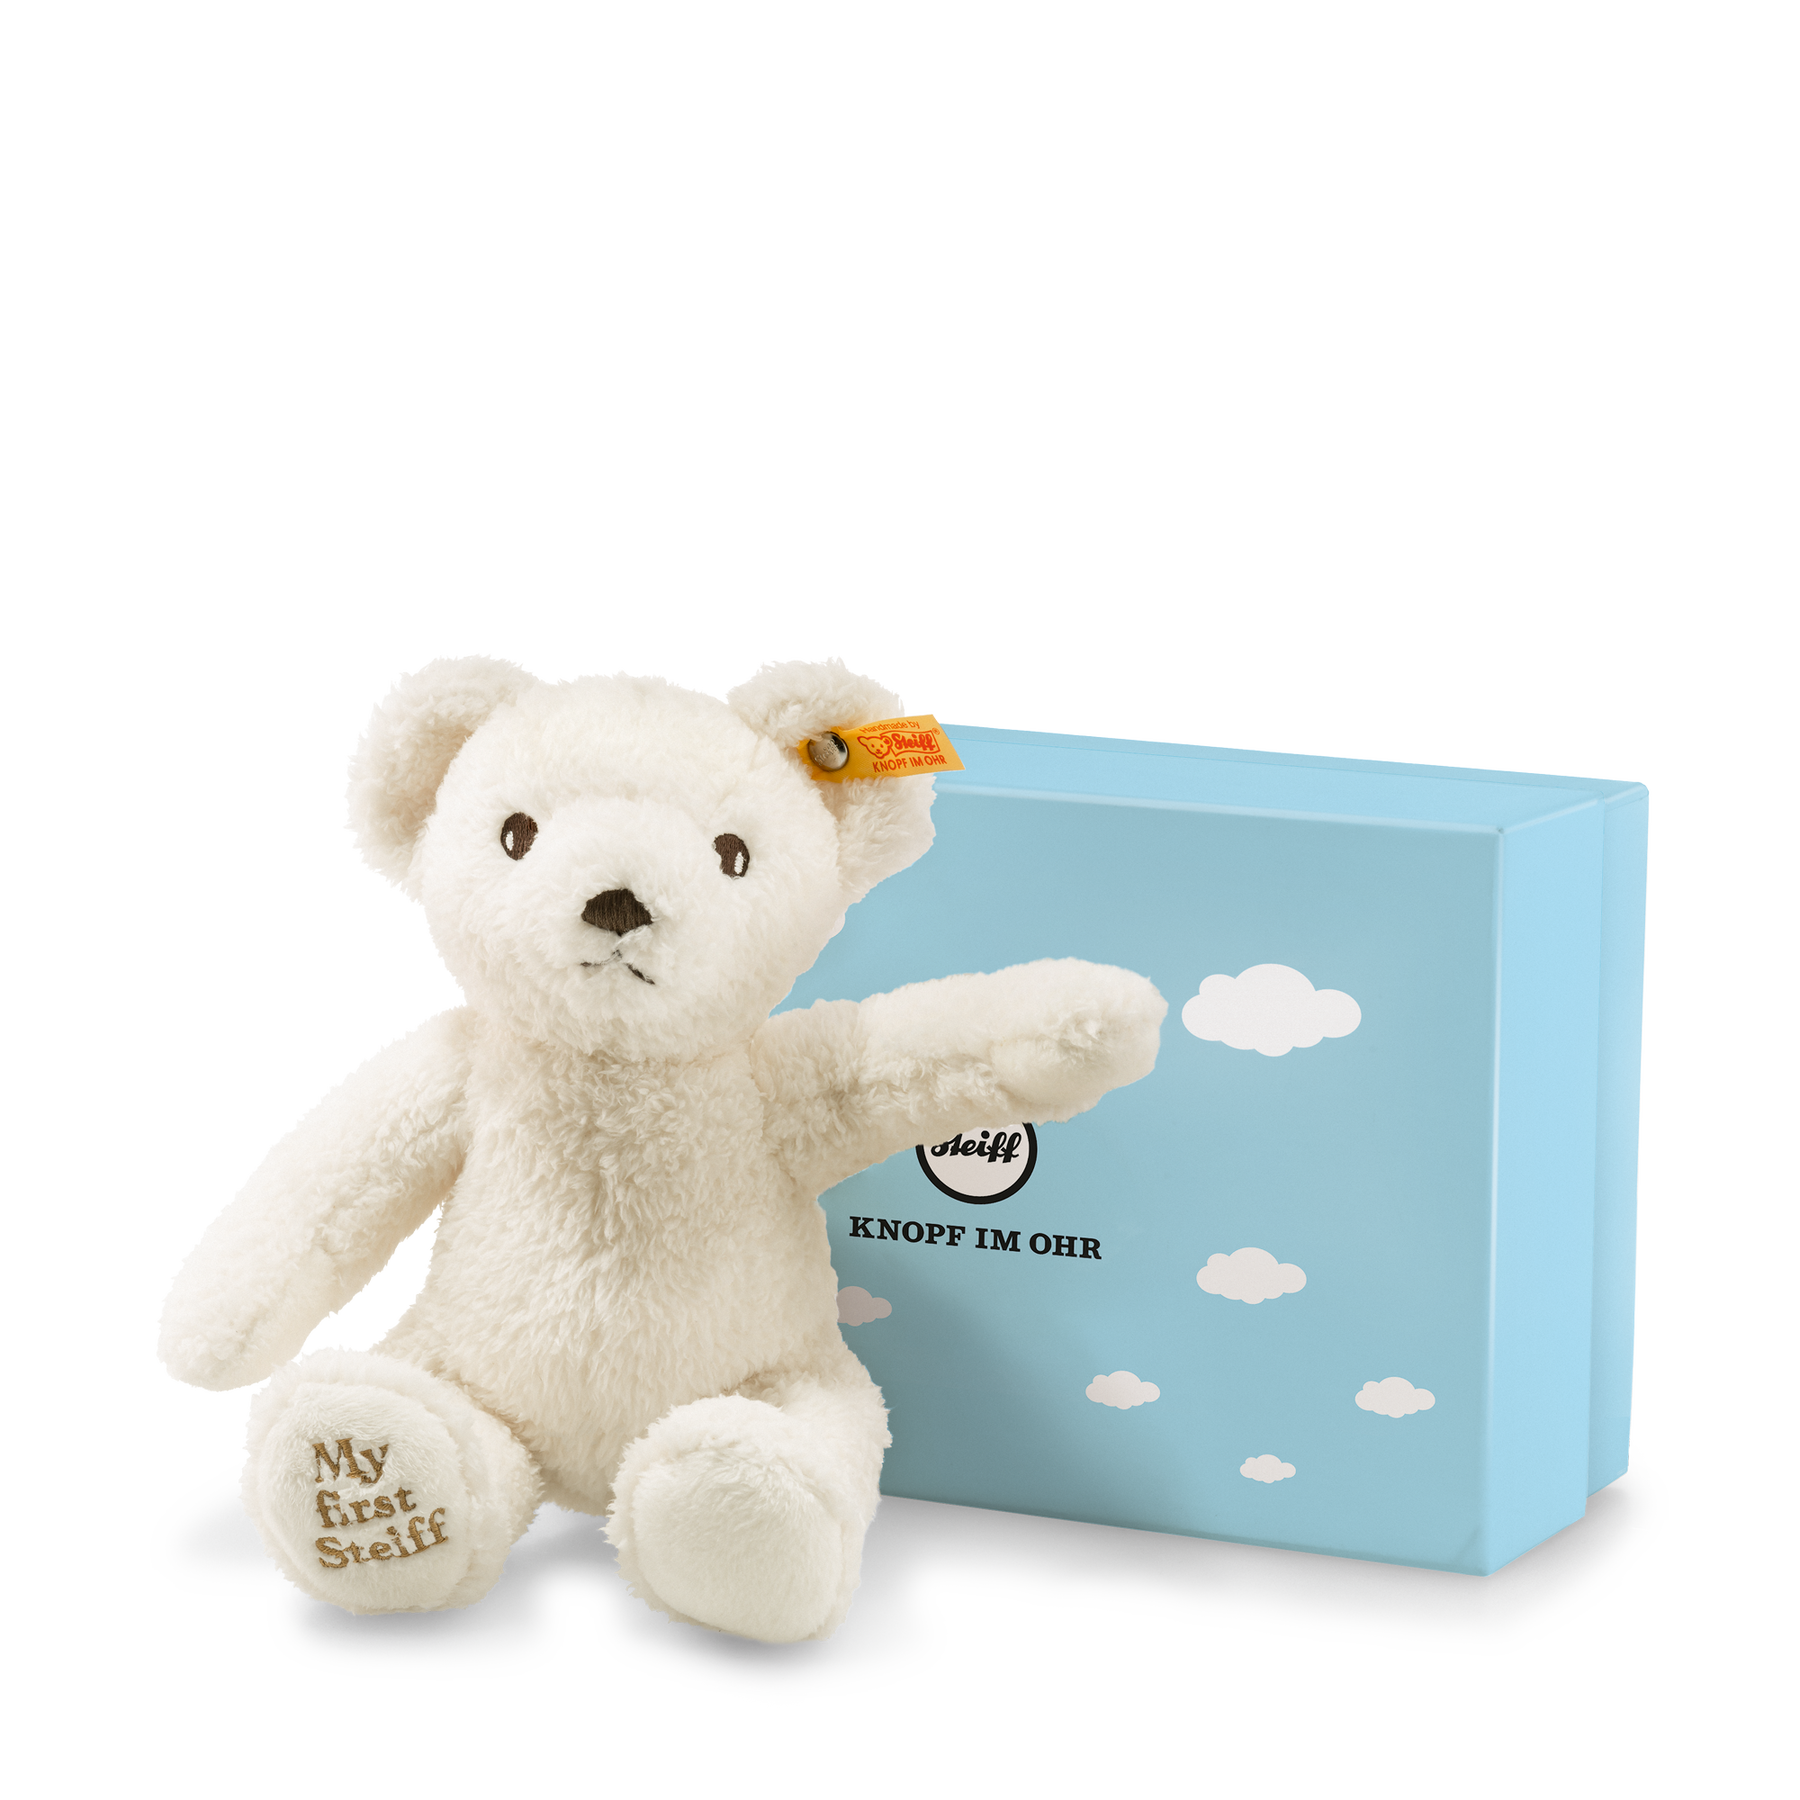 EAN 664021 Steiff 'My First Steiff' washable white baby teddy bear in gift box 